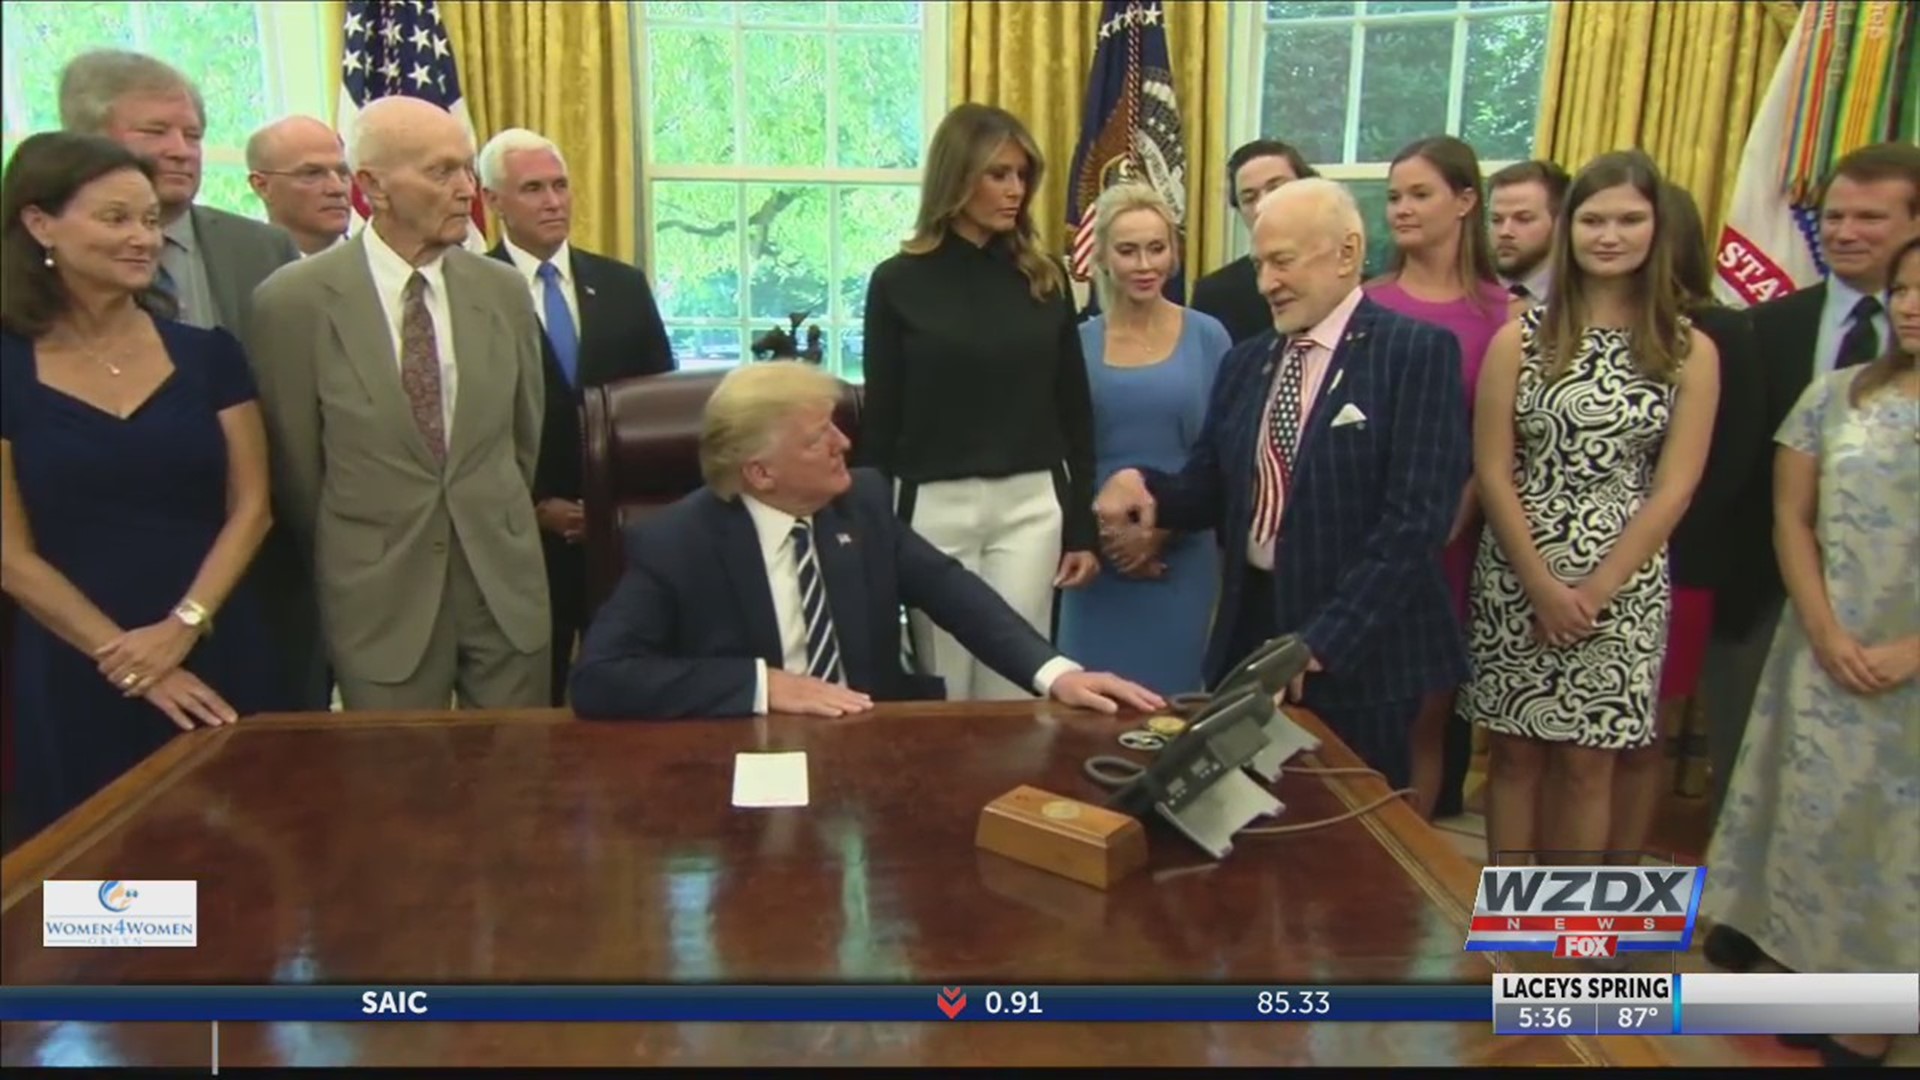 President Trump invited the Apollo 11 crew to the White House to commemorate the 50th anniversary.